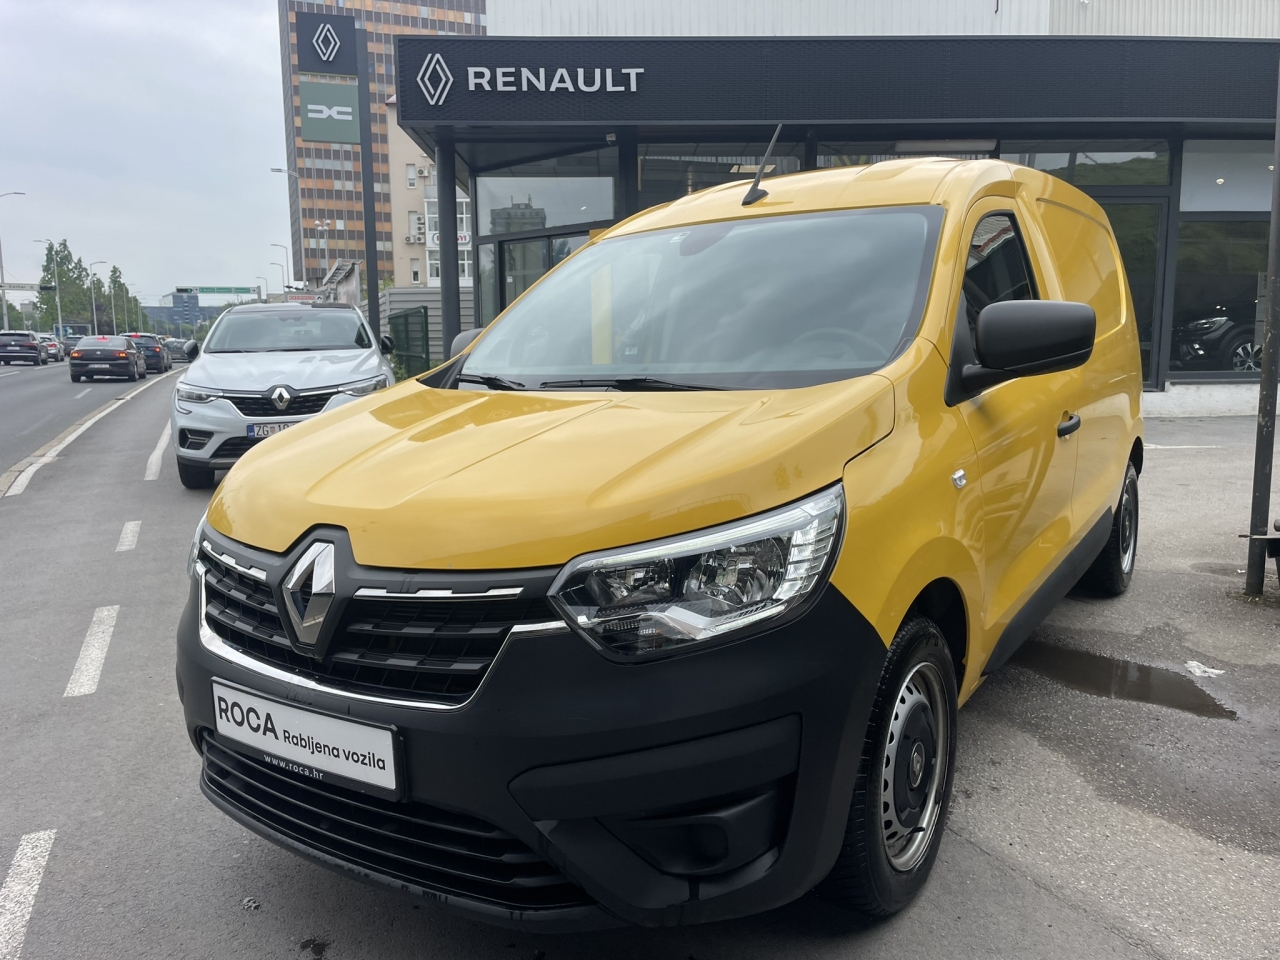 Renault Espace iconic E-Tech full hybrid